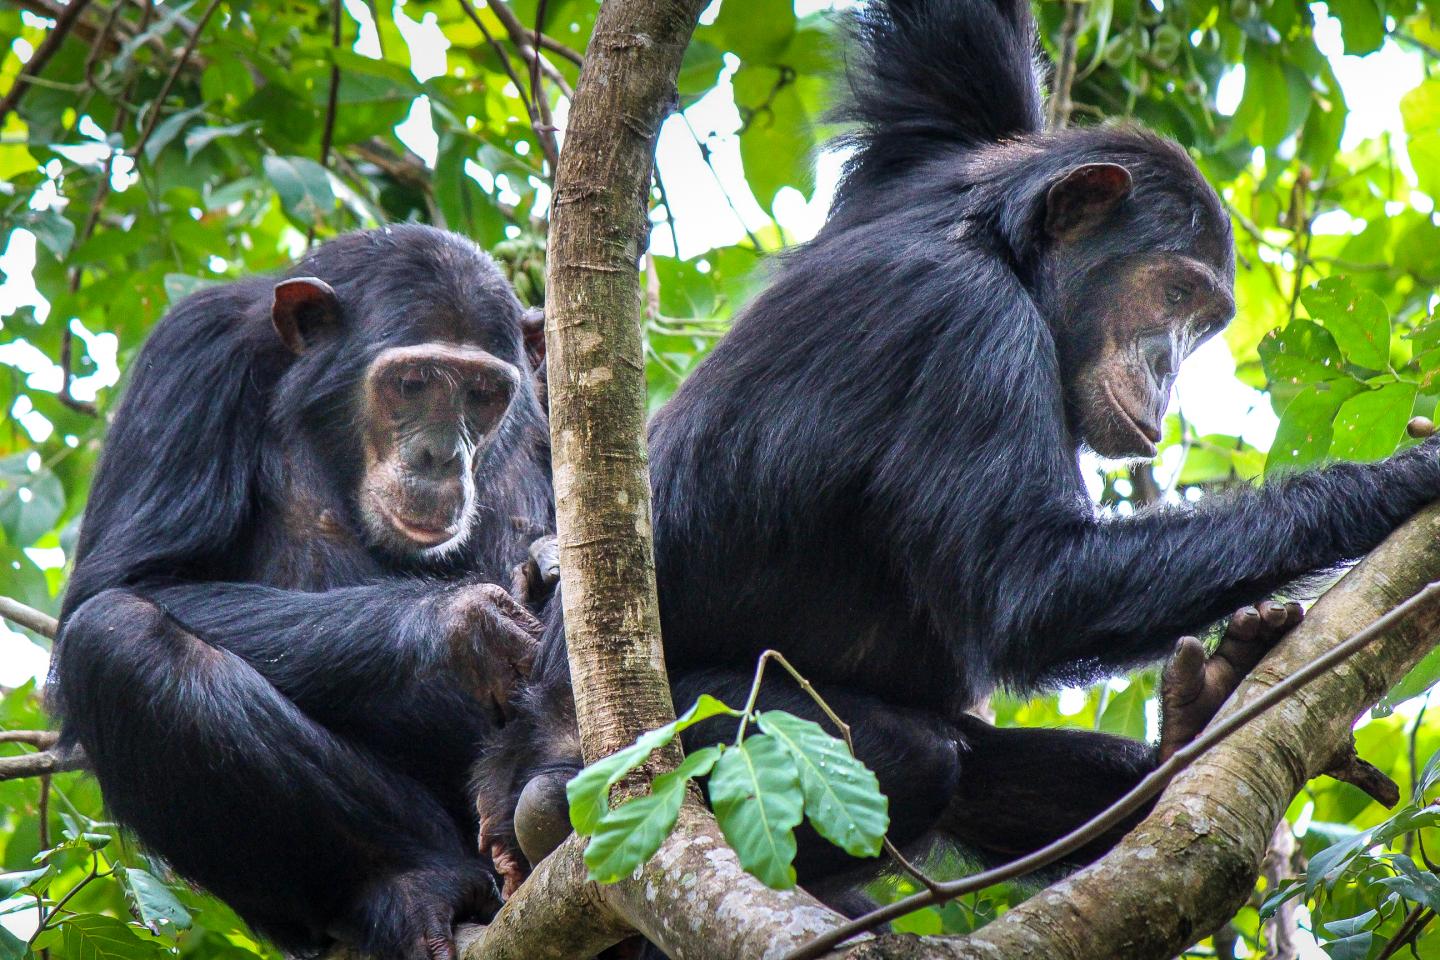 Female Bonding, Chimpanzee-Style